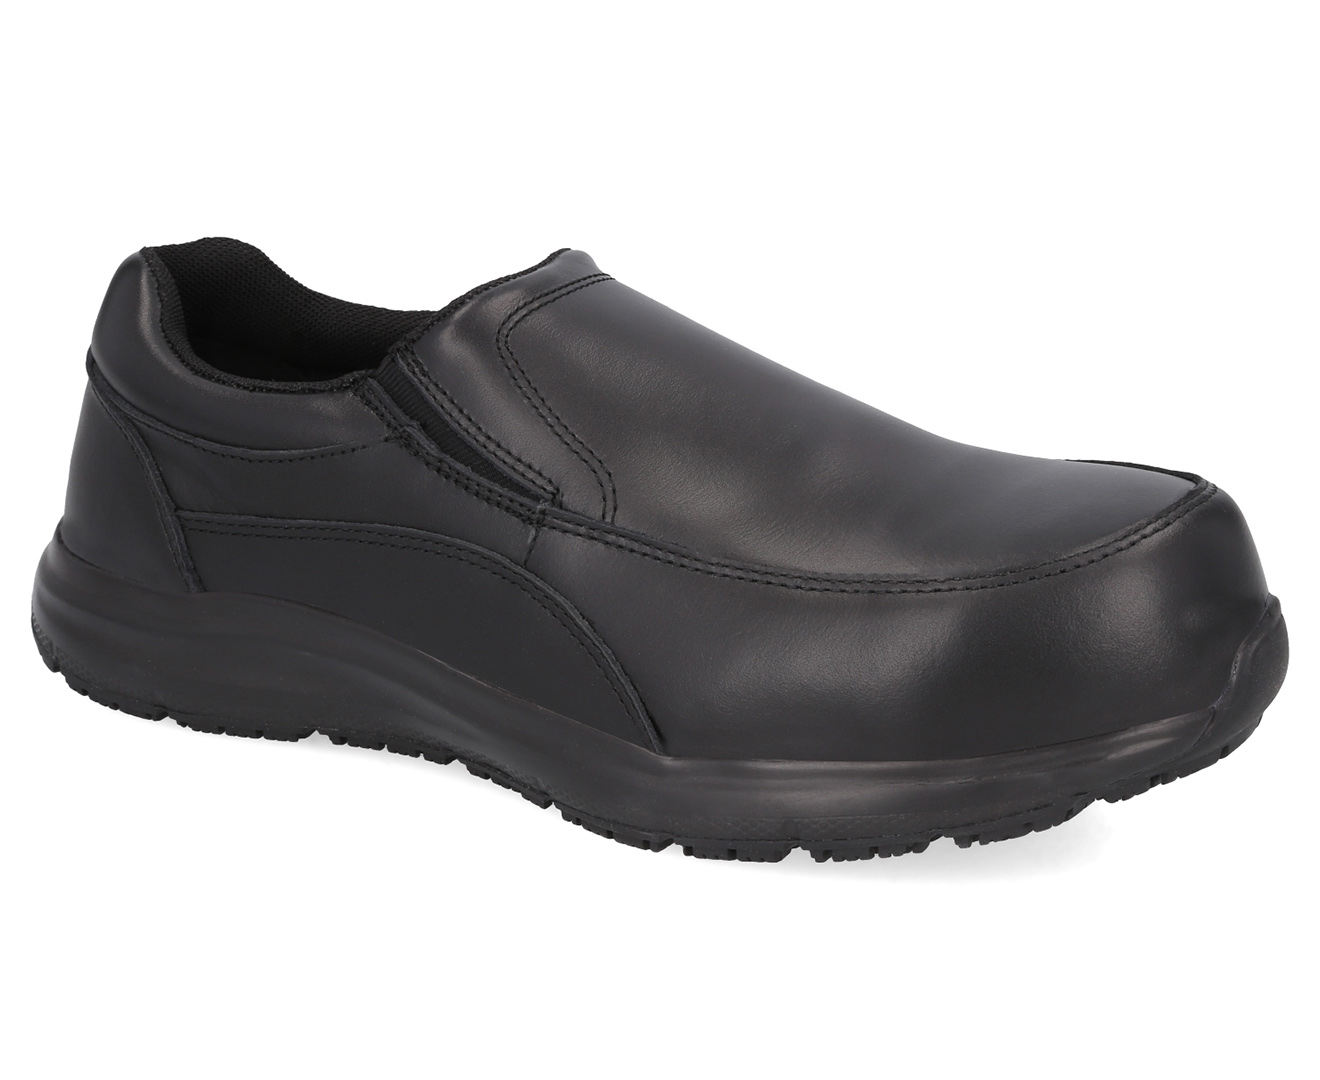 Bata Women's Slip-On Slip Resistant Atlanta Safety Shoes - Black ...